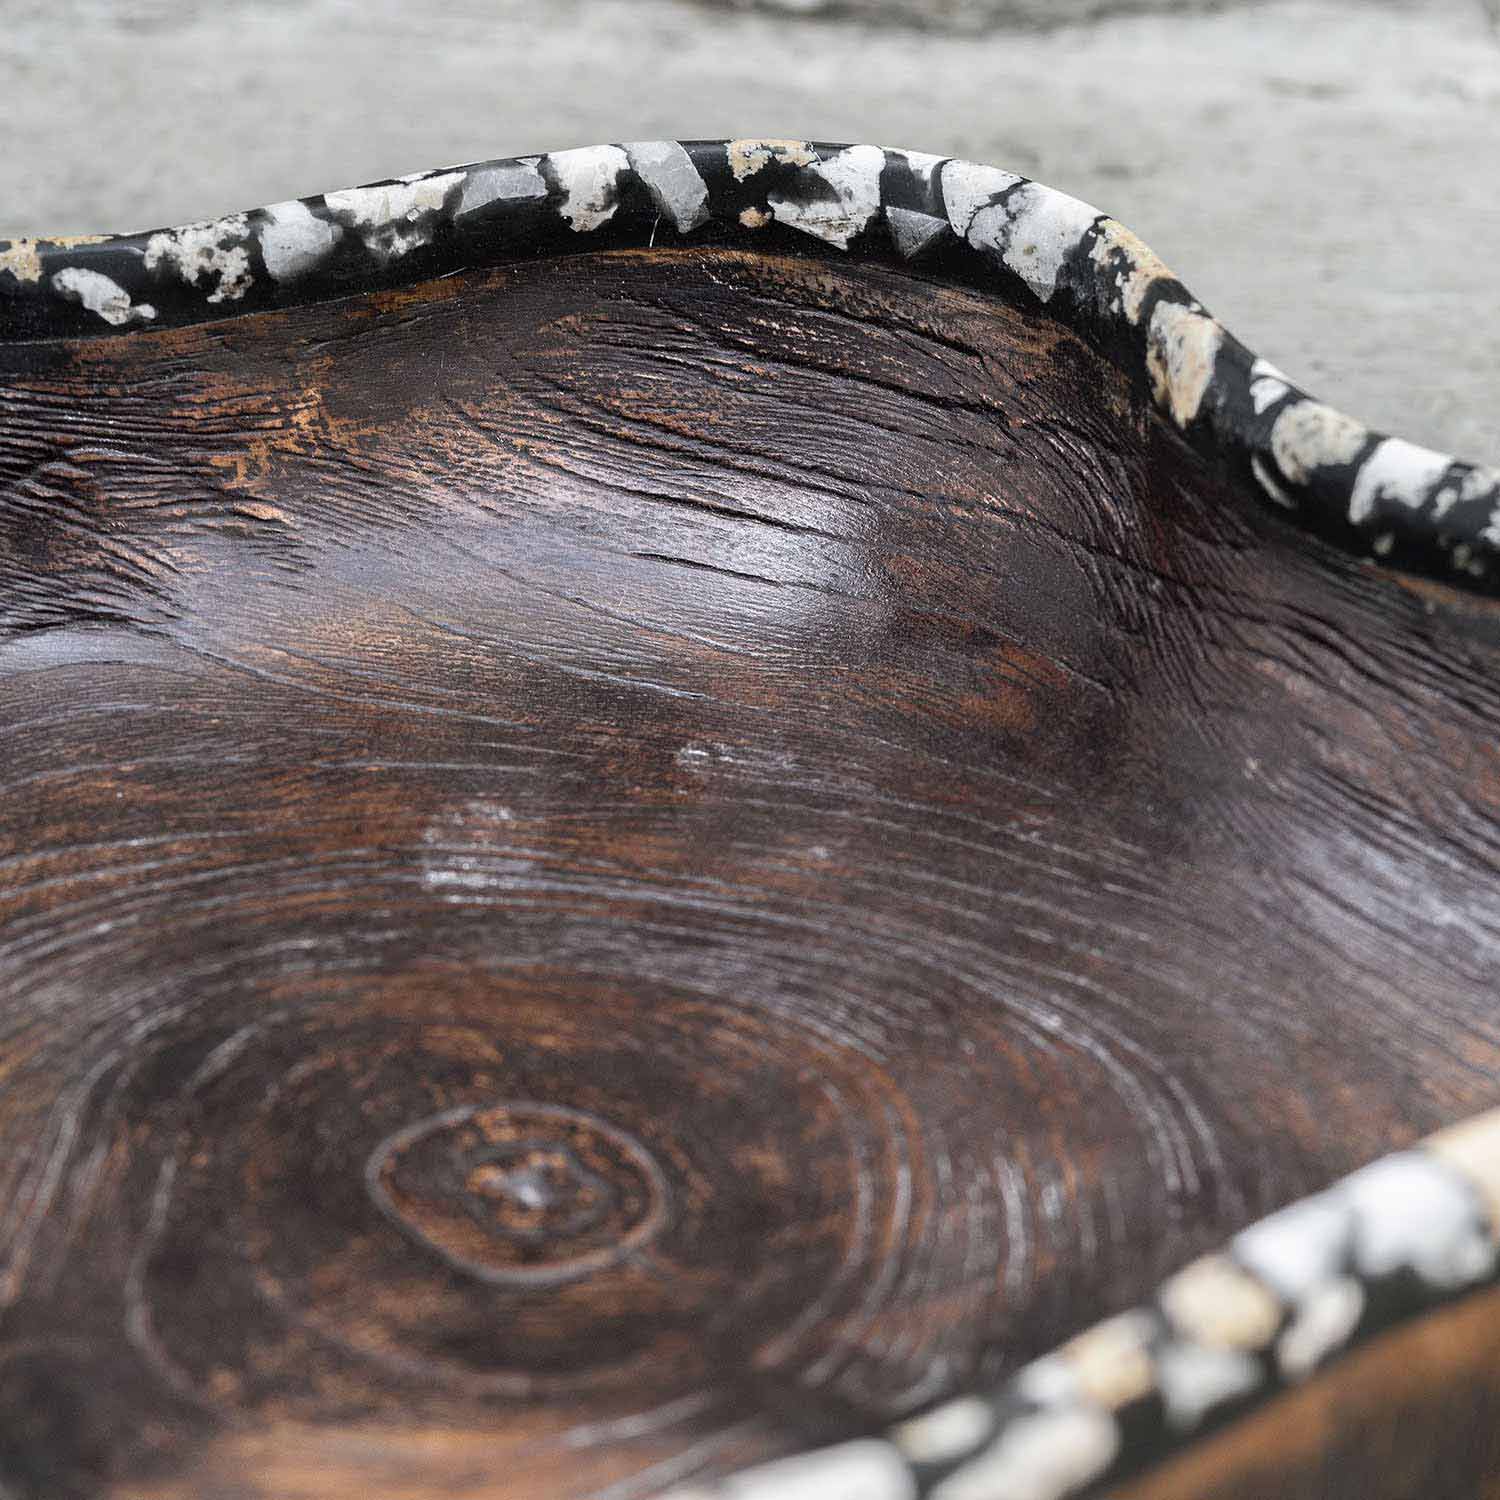 Uttermost Chikasha Wooden Bowl - Large